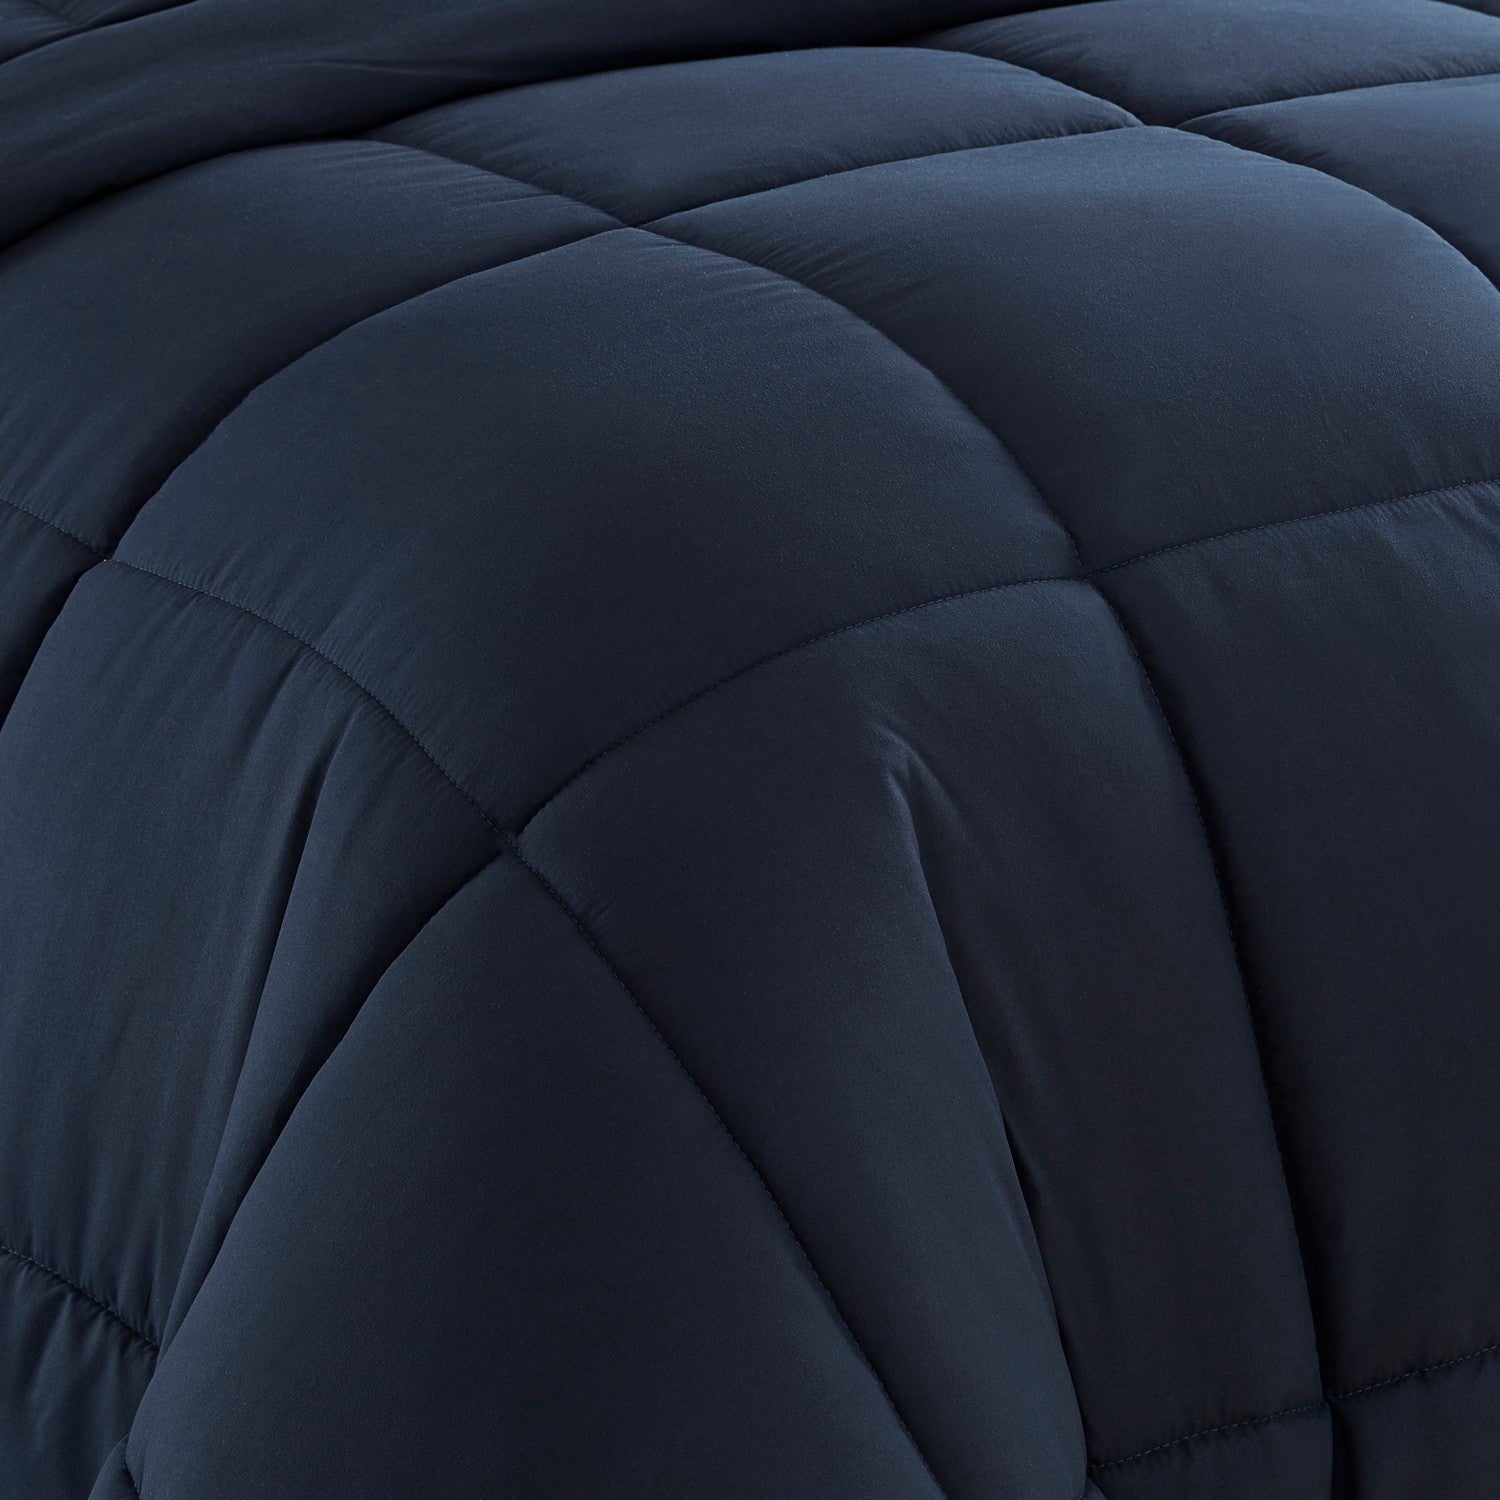 Basic 5-Piece Bed in a Bag  Set Navy - Comforter Detail